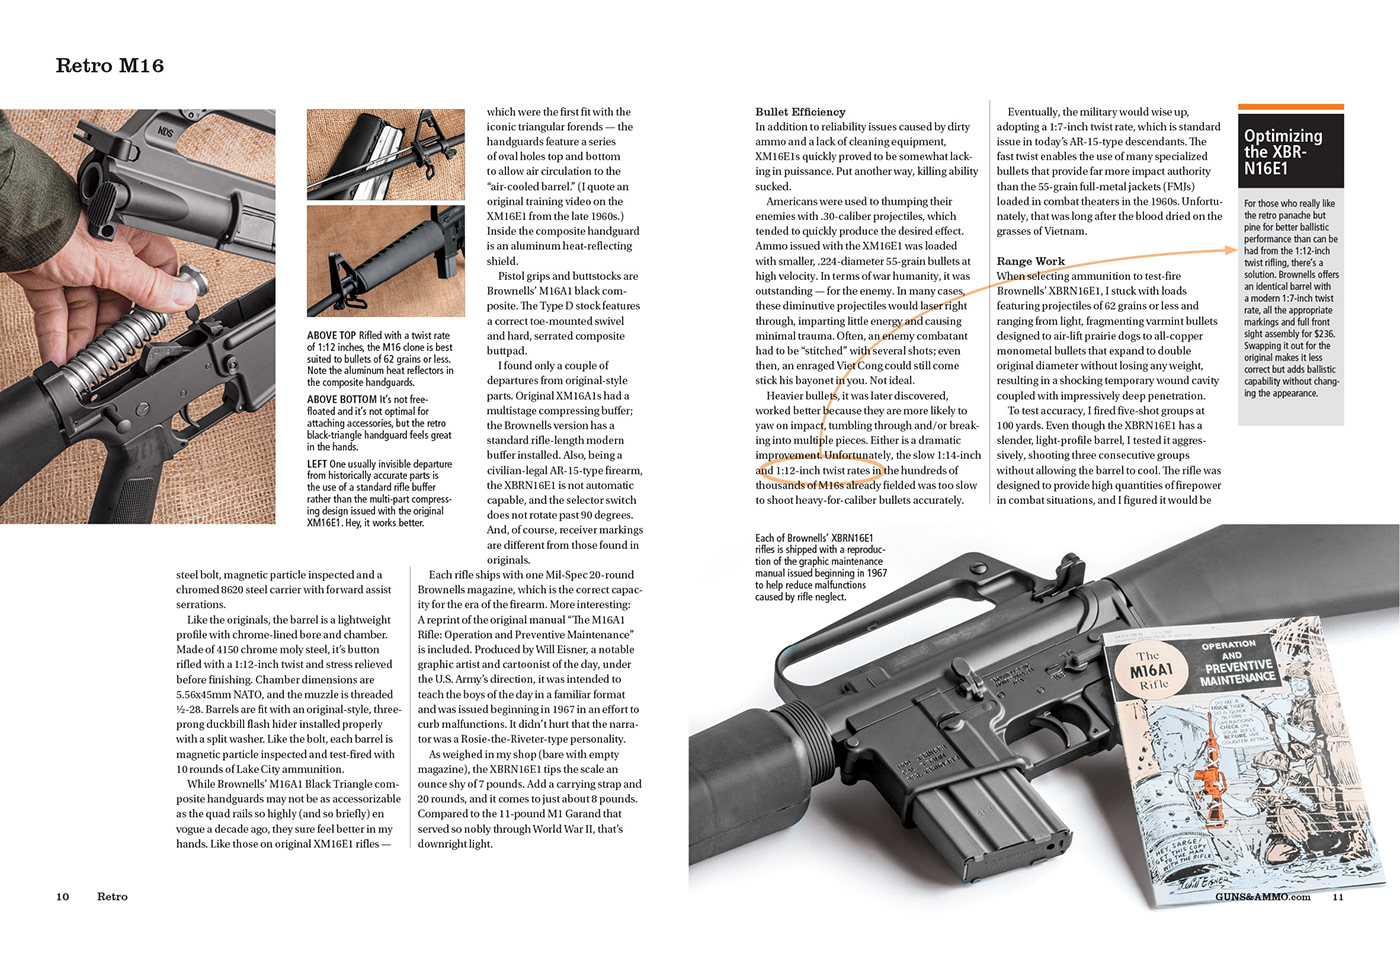 guns Ammo magazine Firearms